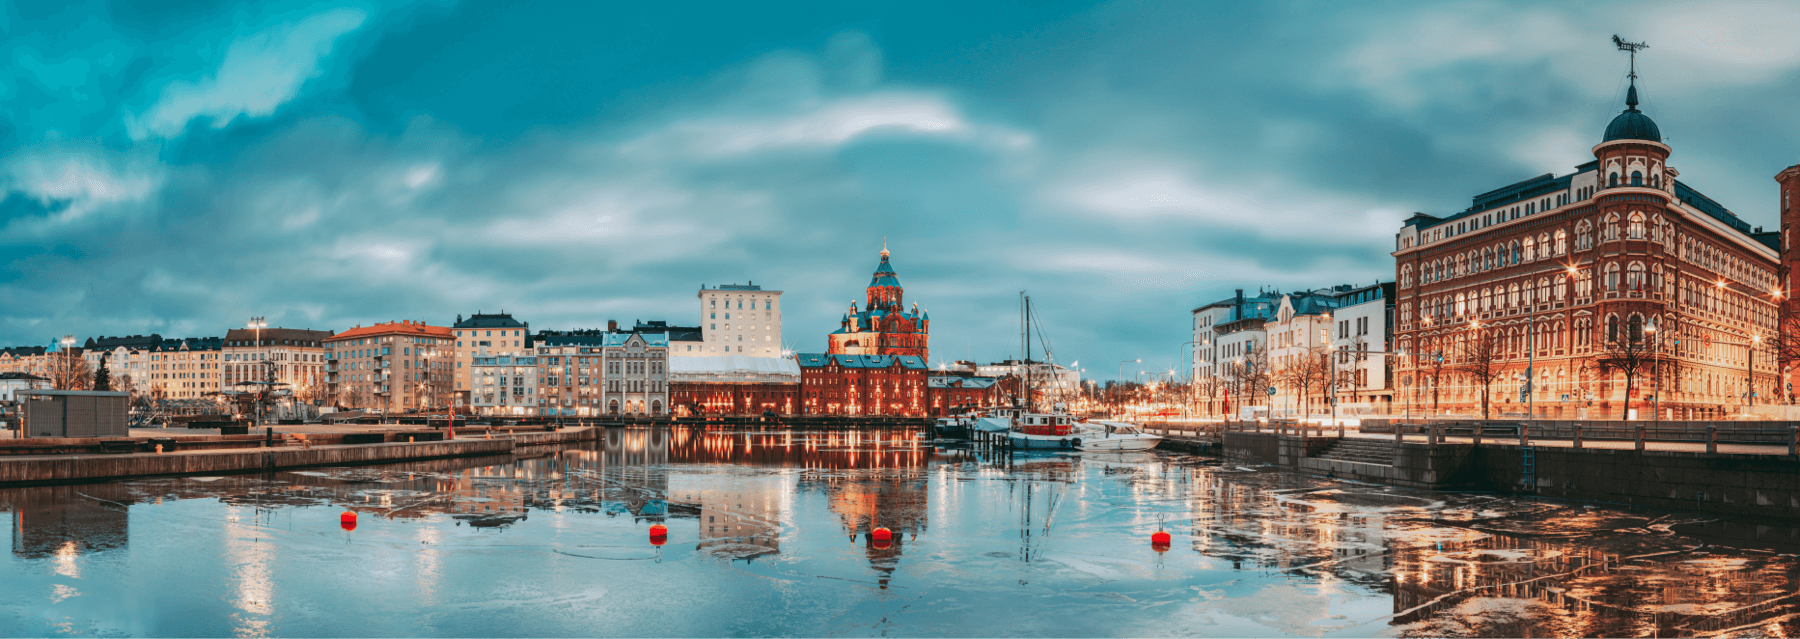 Finnish city lit up at dusk